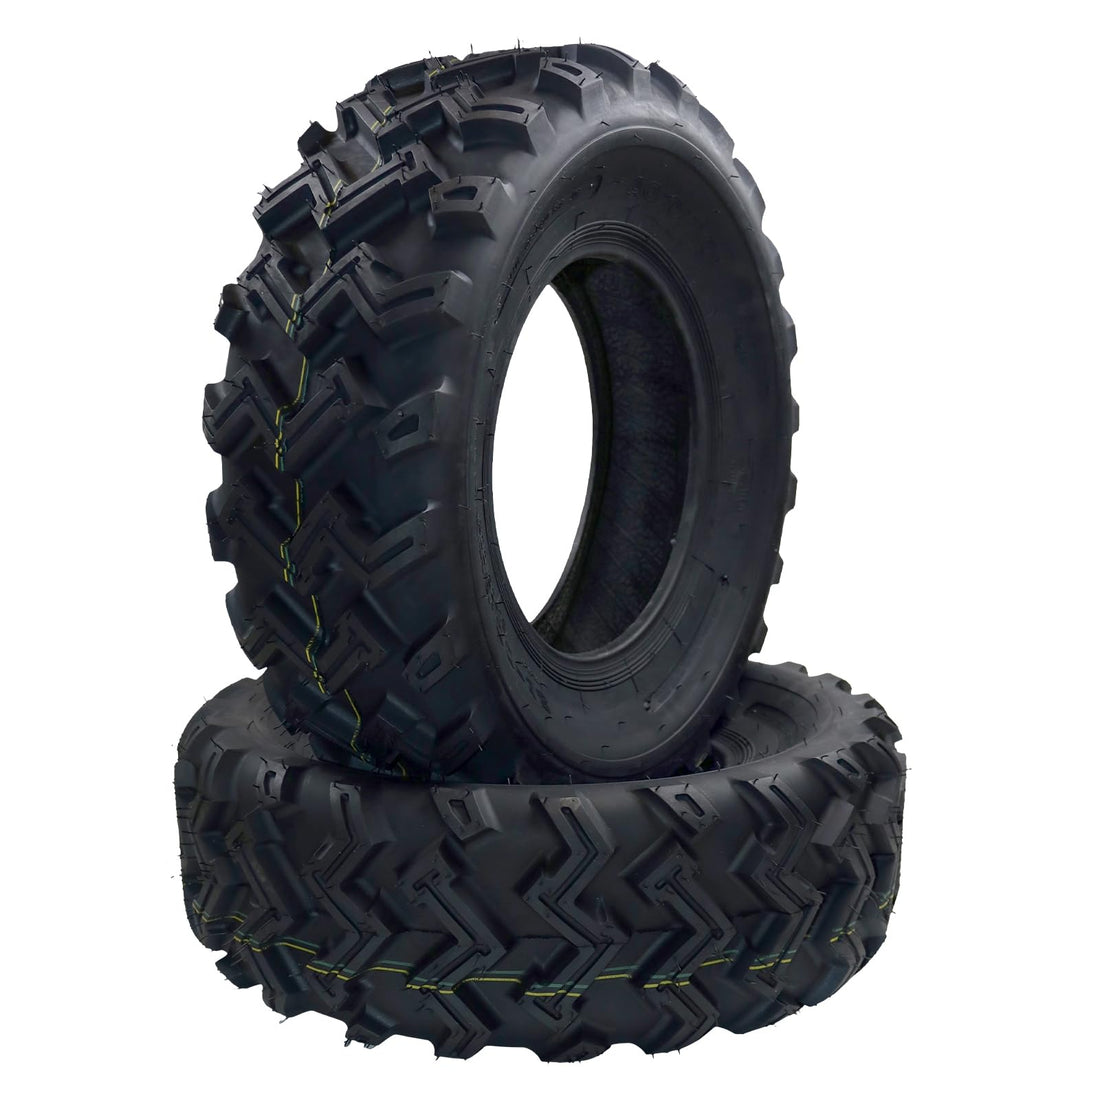 25x8-12 6PR ATV/UTV Tires, All Terrain Tires 25x8x12 Trail Sand Mud Stream Off-Road Tires, Tubeless Set of 2